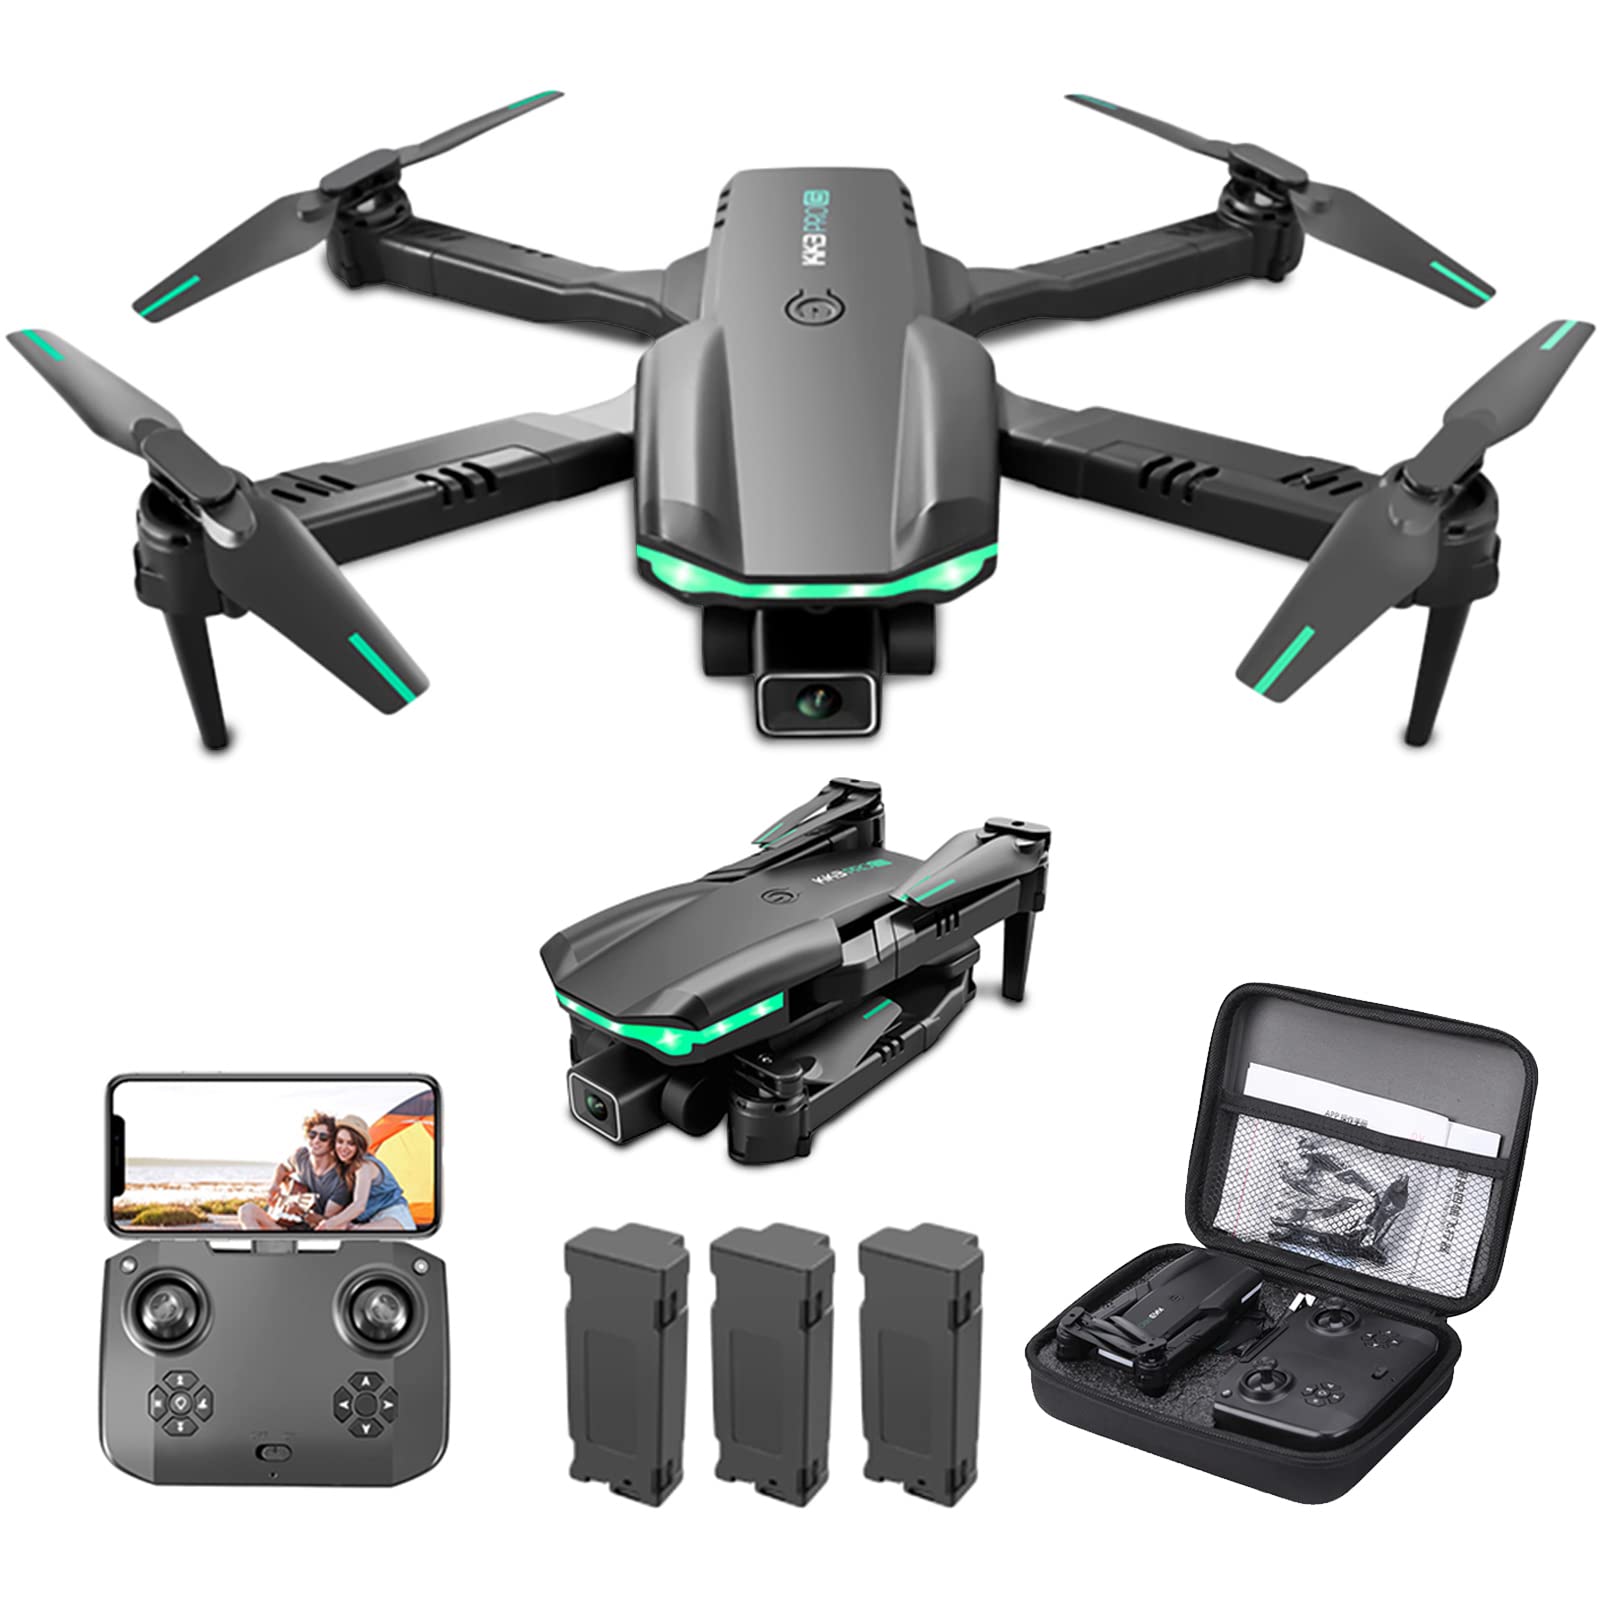 BIOSA Mini Drohne for Kinder mit Kamera 1080P HD Faltbare Drohne RC Quadrocopter, Handy Steuerung, 3D Flip, Höhenhaltung, Headless Modus for Anfänger